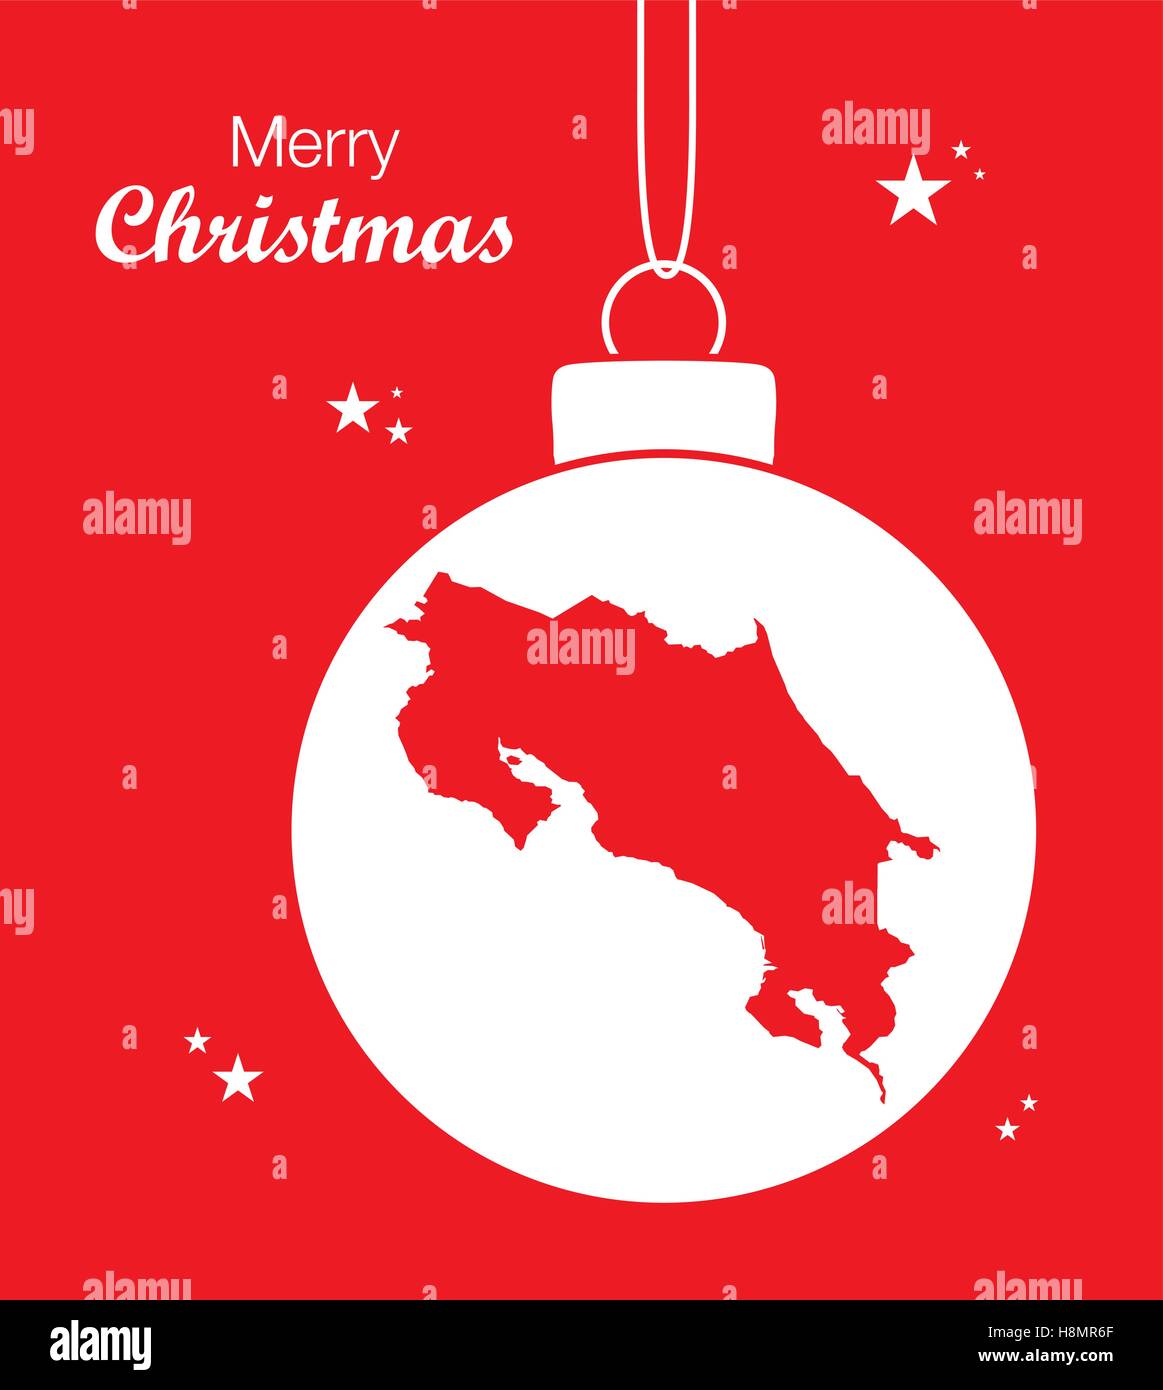 Merry Christmas Map Costa Rica Stock Vector